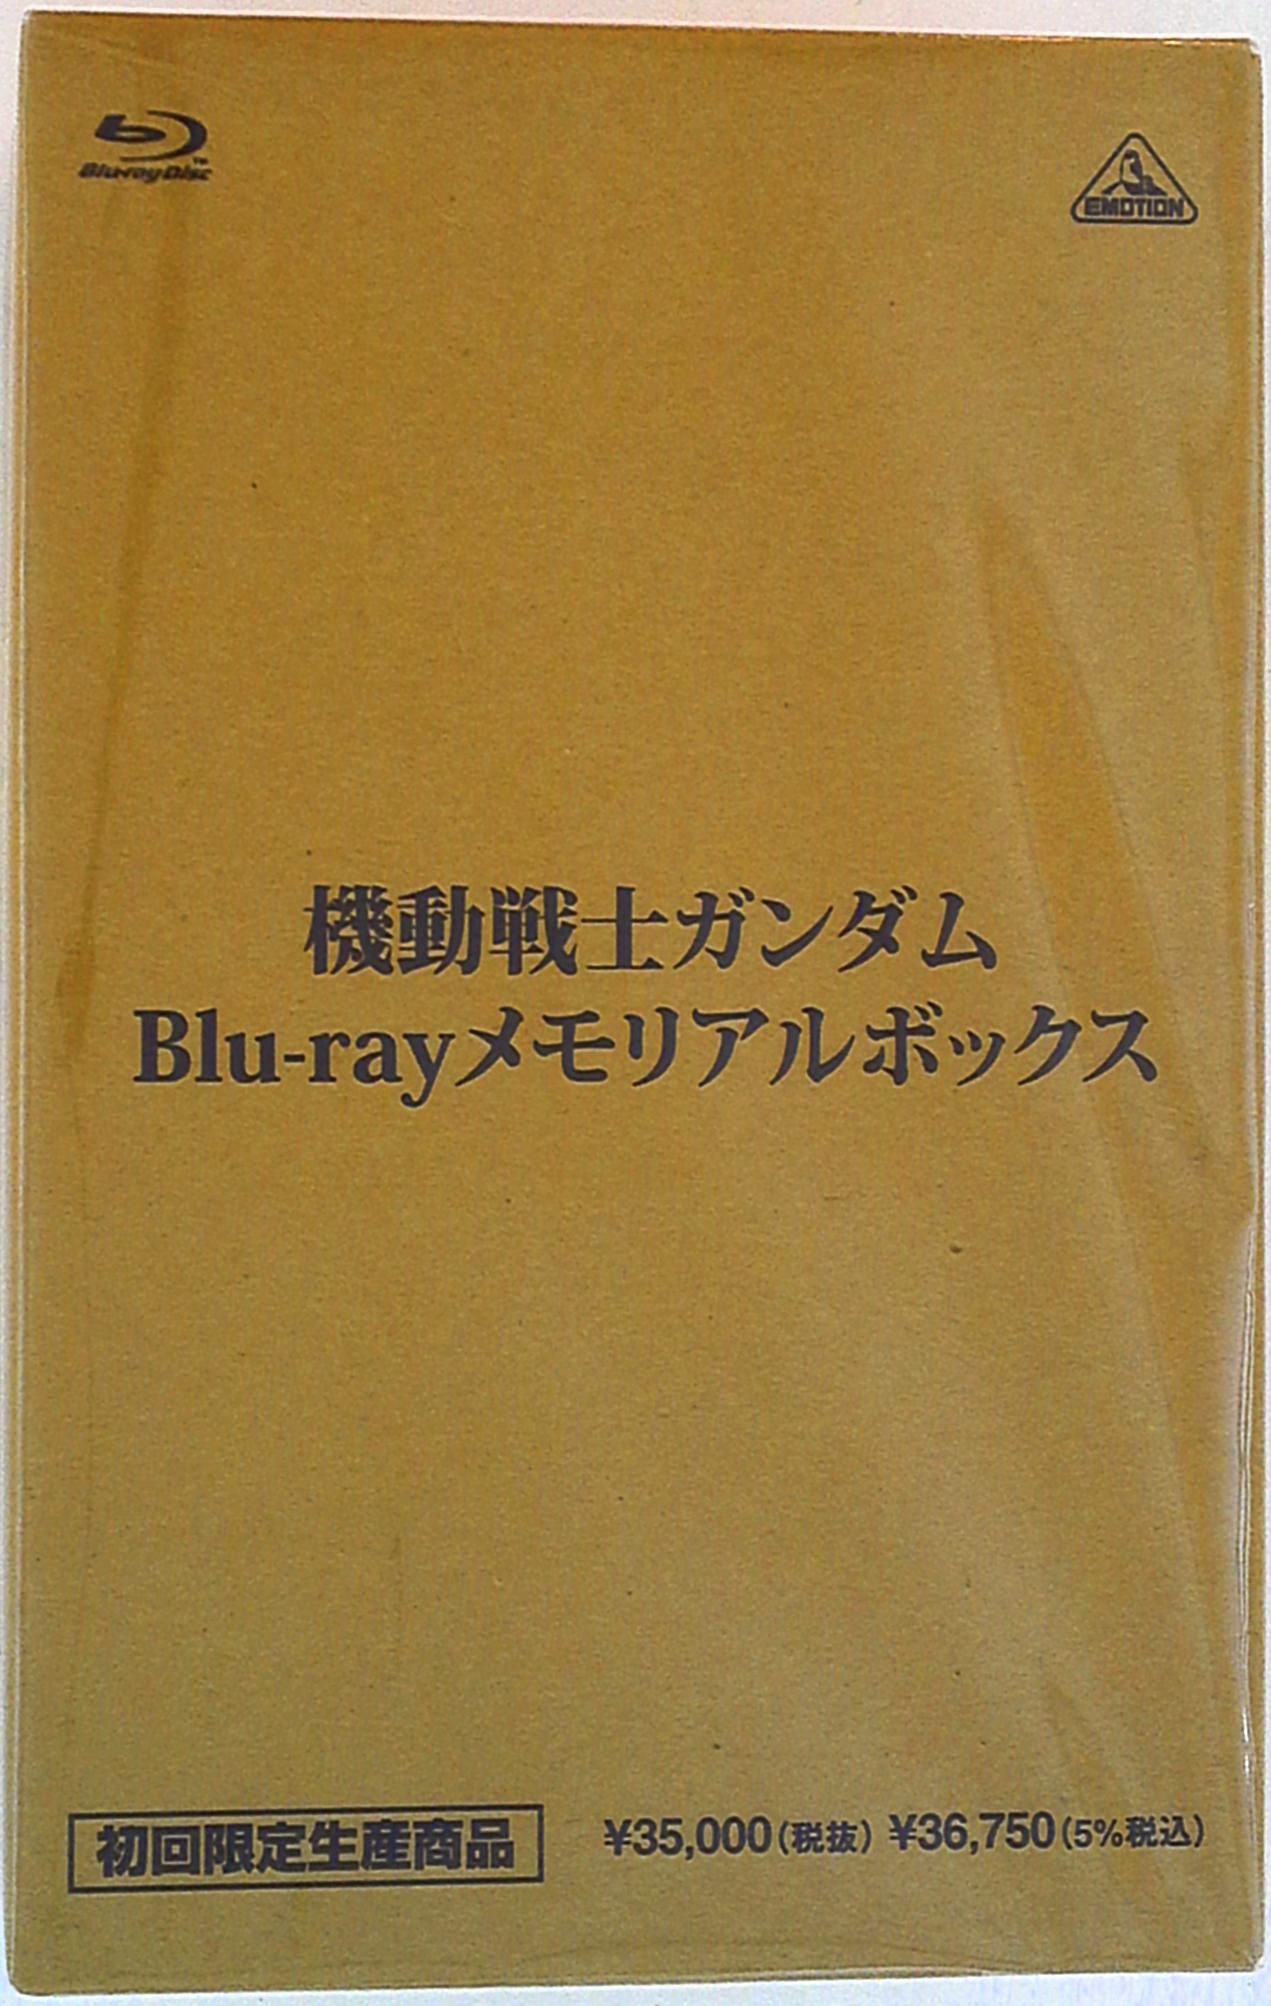 Anime - Blu-Ray Mobile Suit Gundam Blu - ray Memorial Box